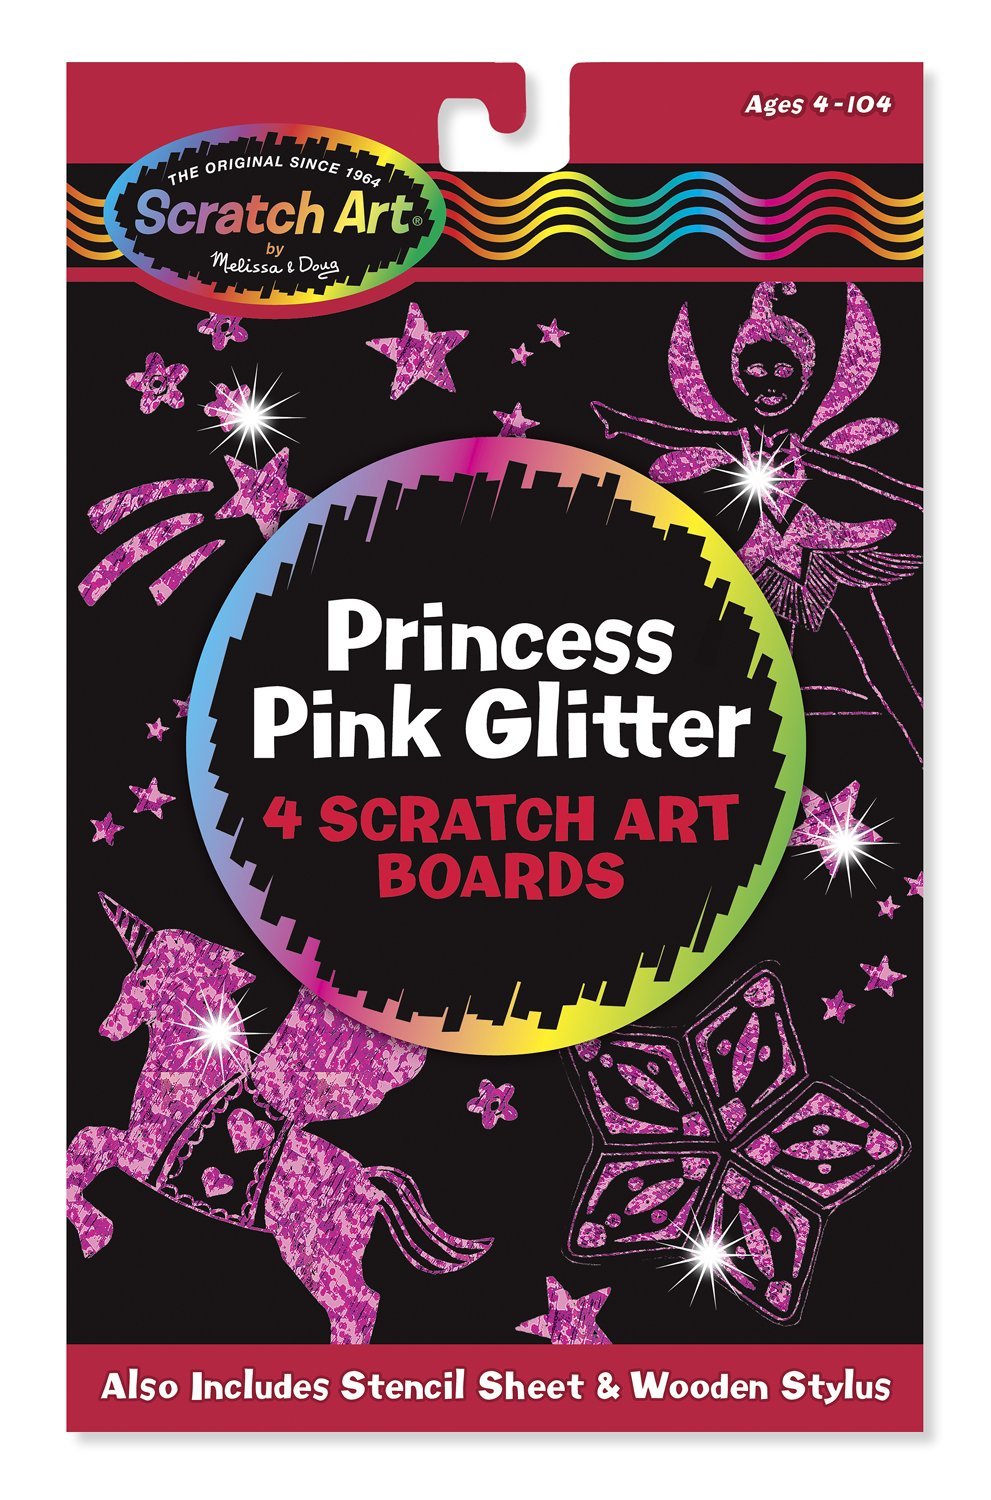 Melissa & Doug - Scratch Art: Princess Pink Glitter Board 4 Scratch Art Boards Ages 5 to 95 [Home Decor]- Olde Church Emporium